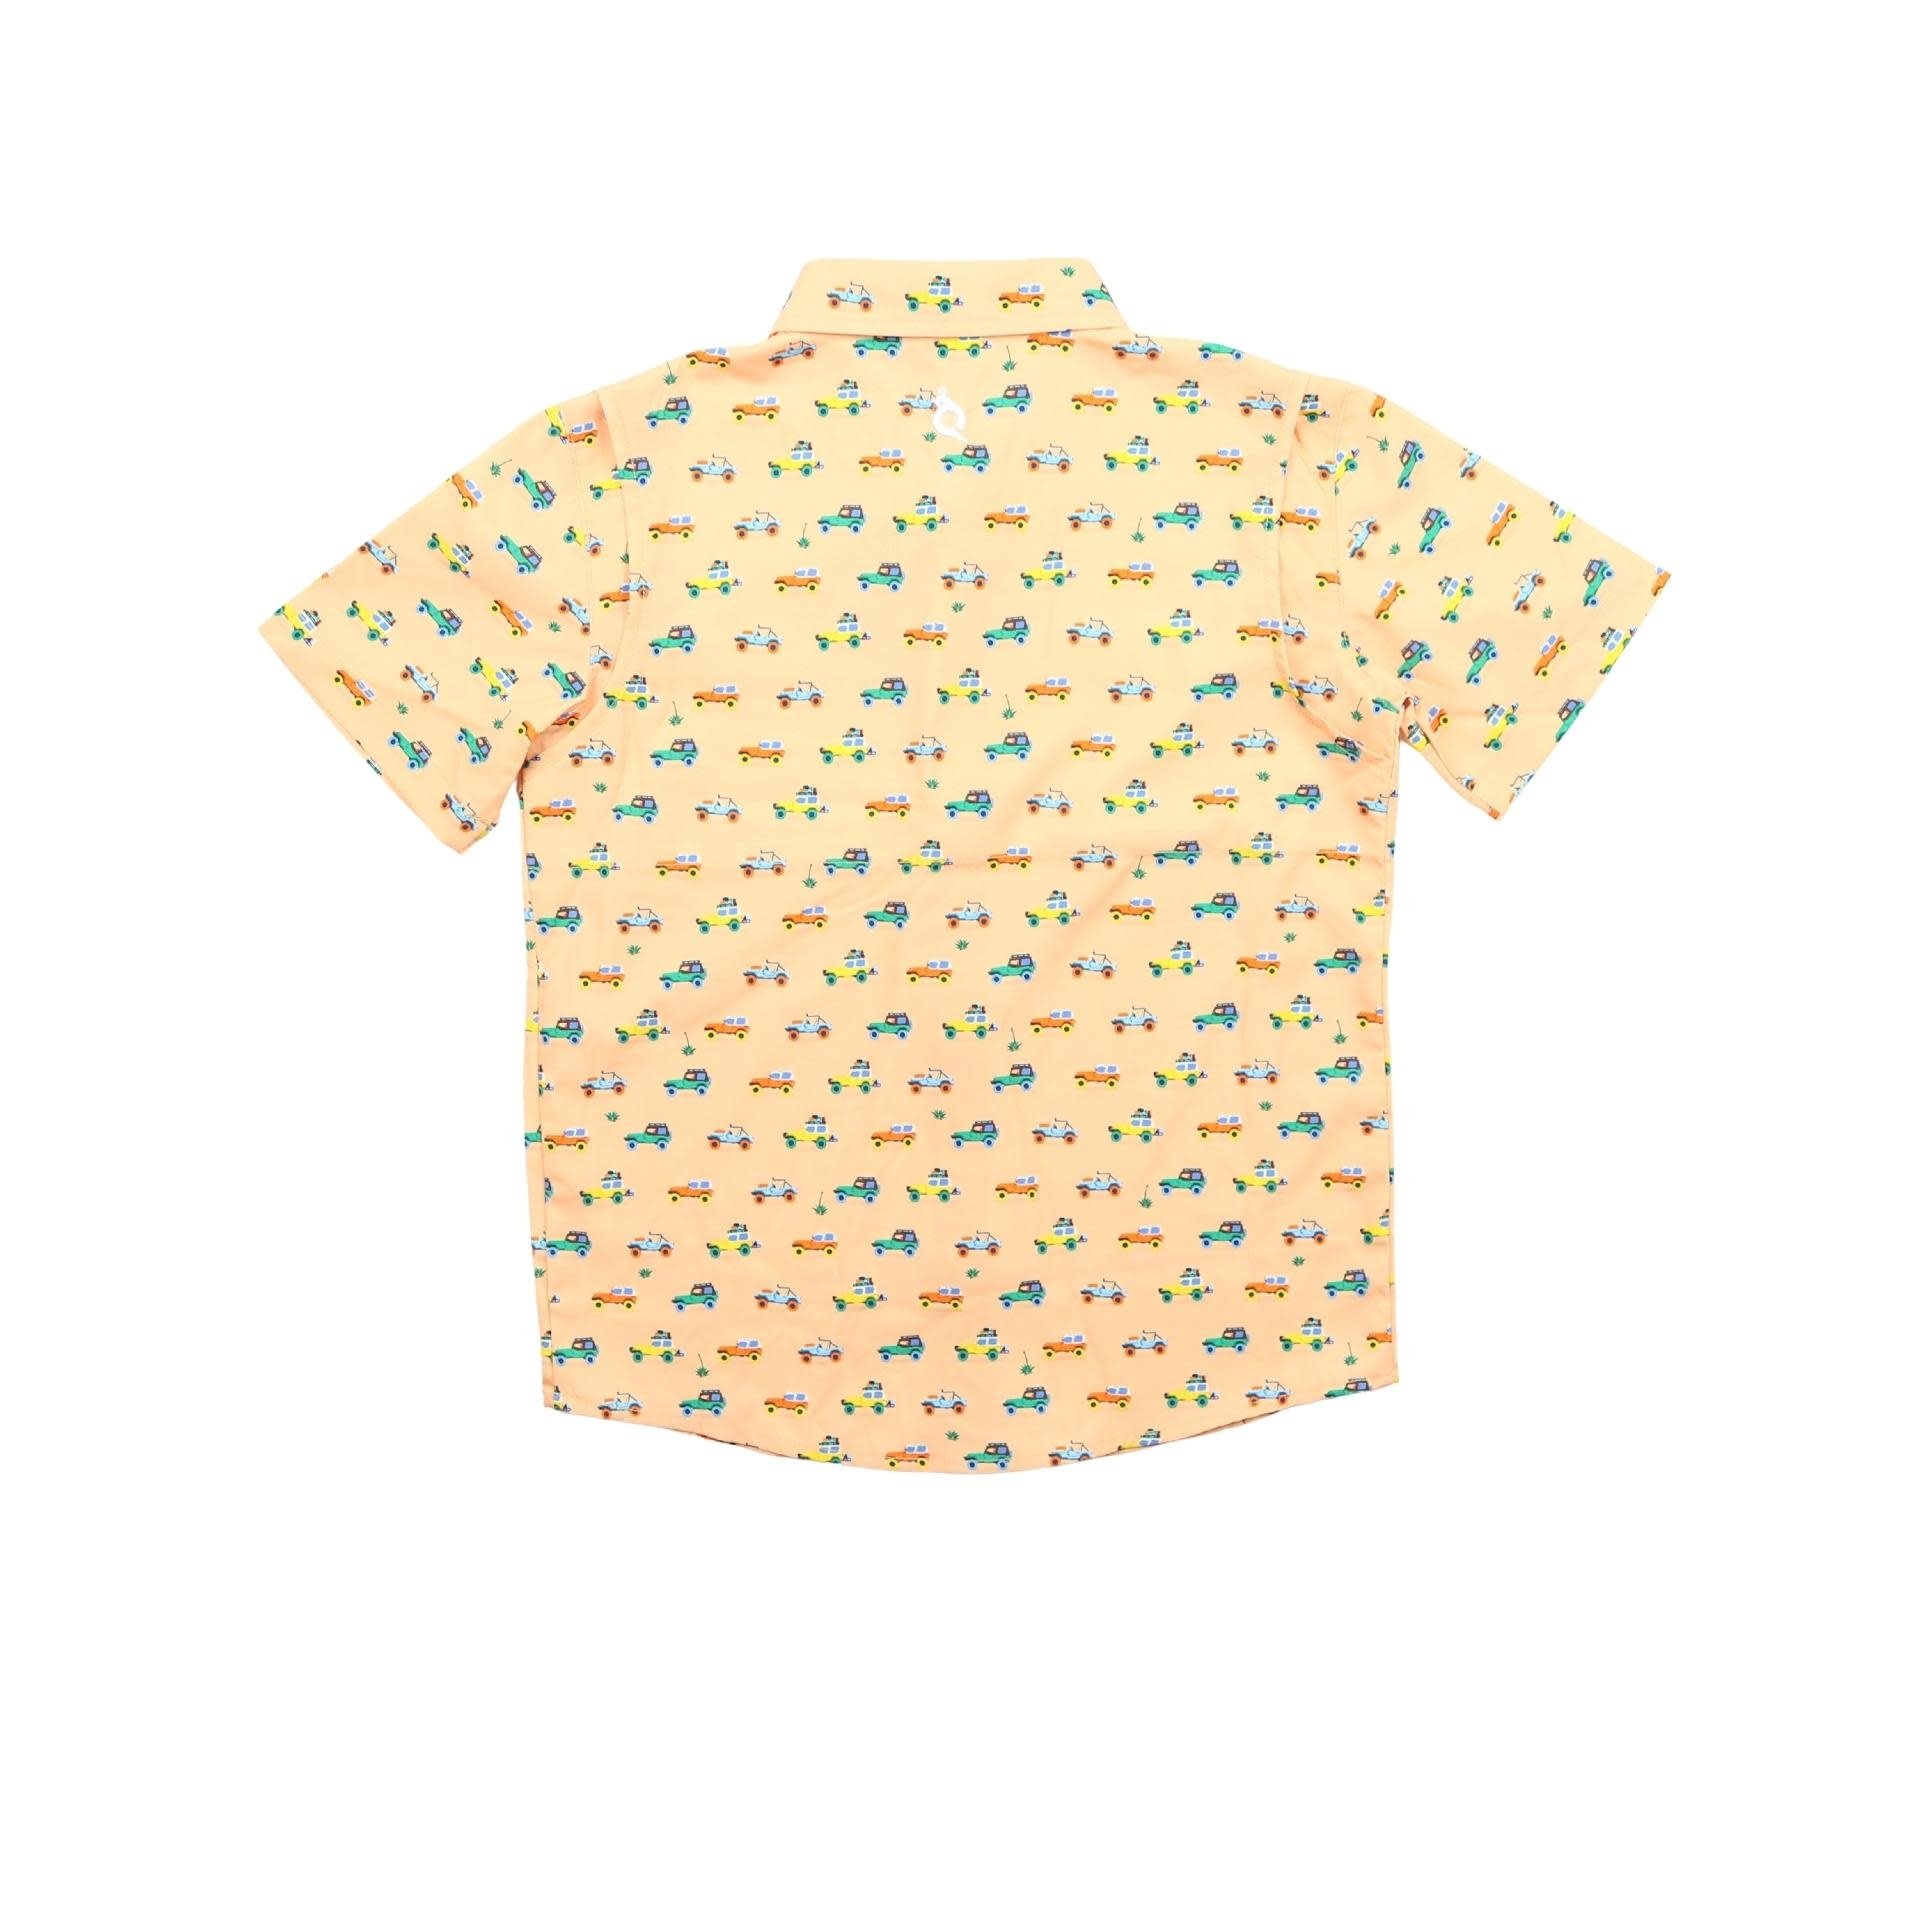 Blue Quail Clothing Co Short Sleeve Fishing Shirt